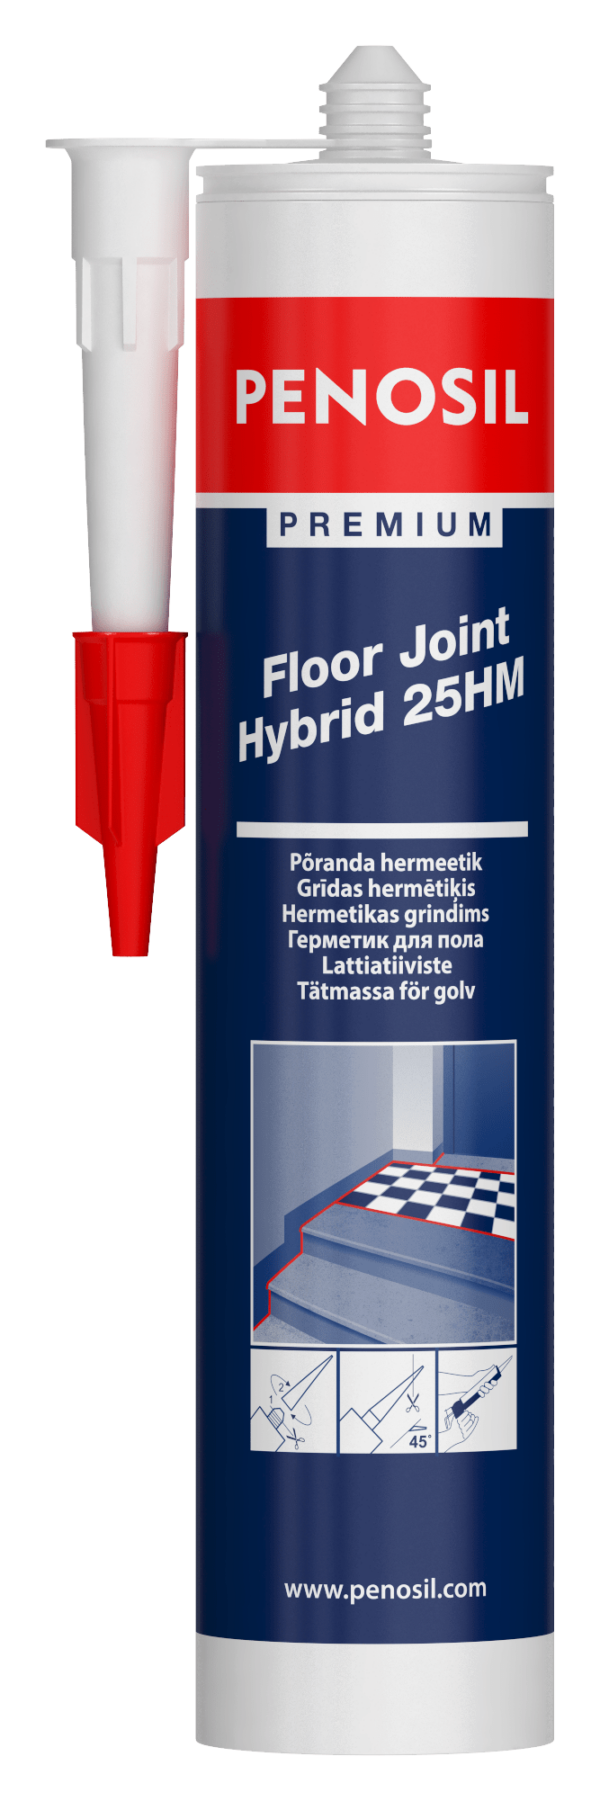 PENOSIL Premium Floor Joint Hybrid 25HM podlahový tmel vysokomodulový